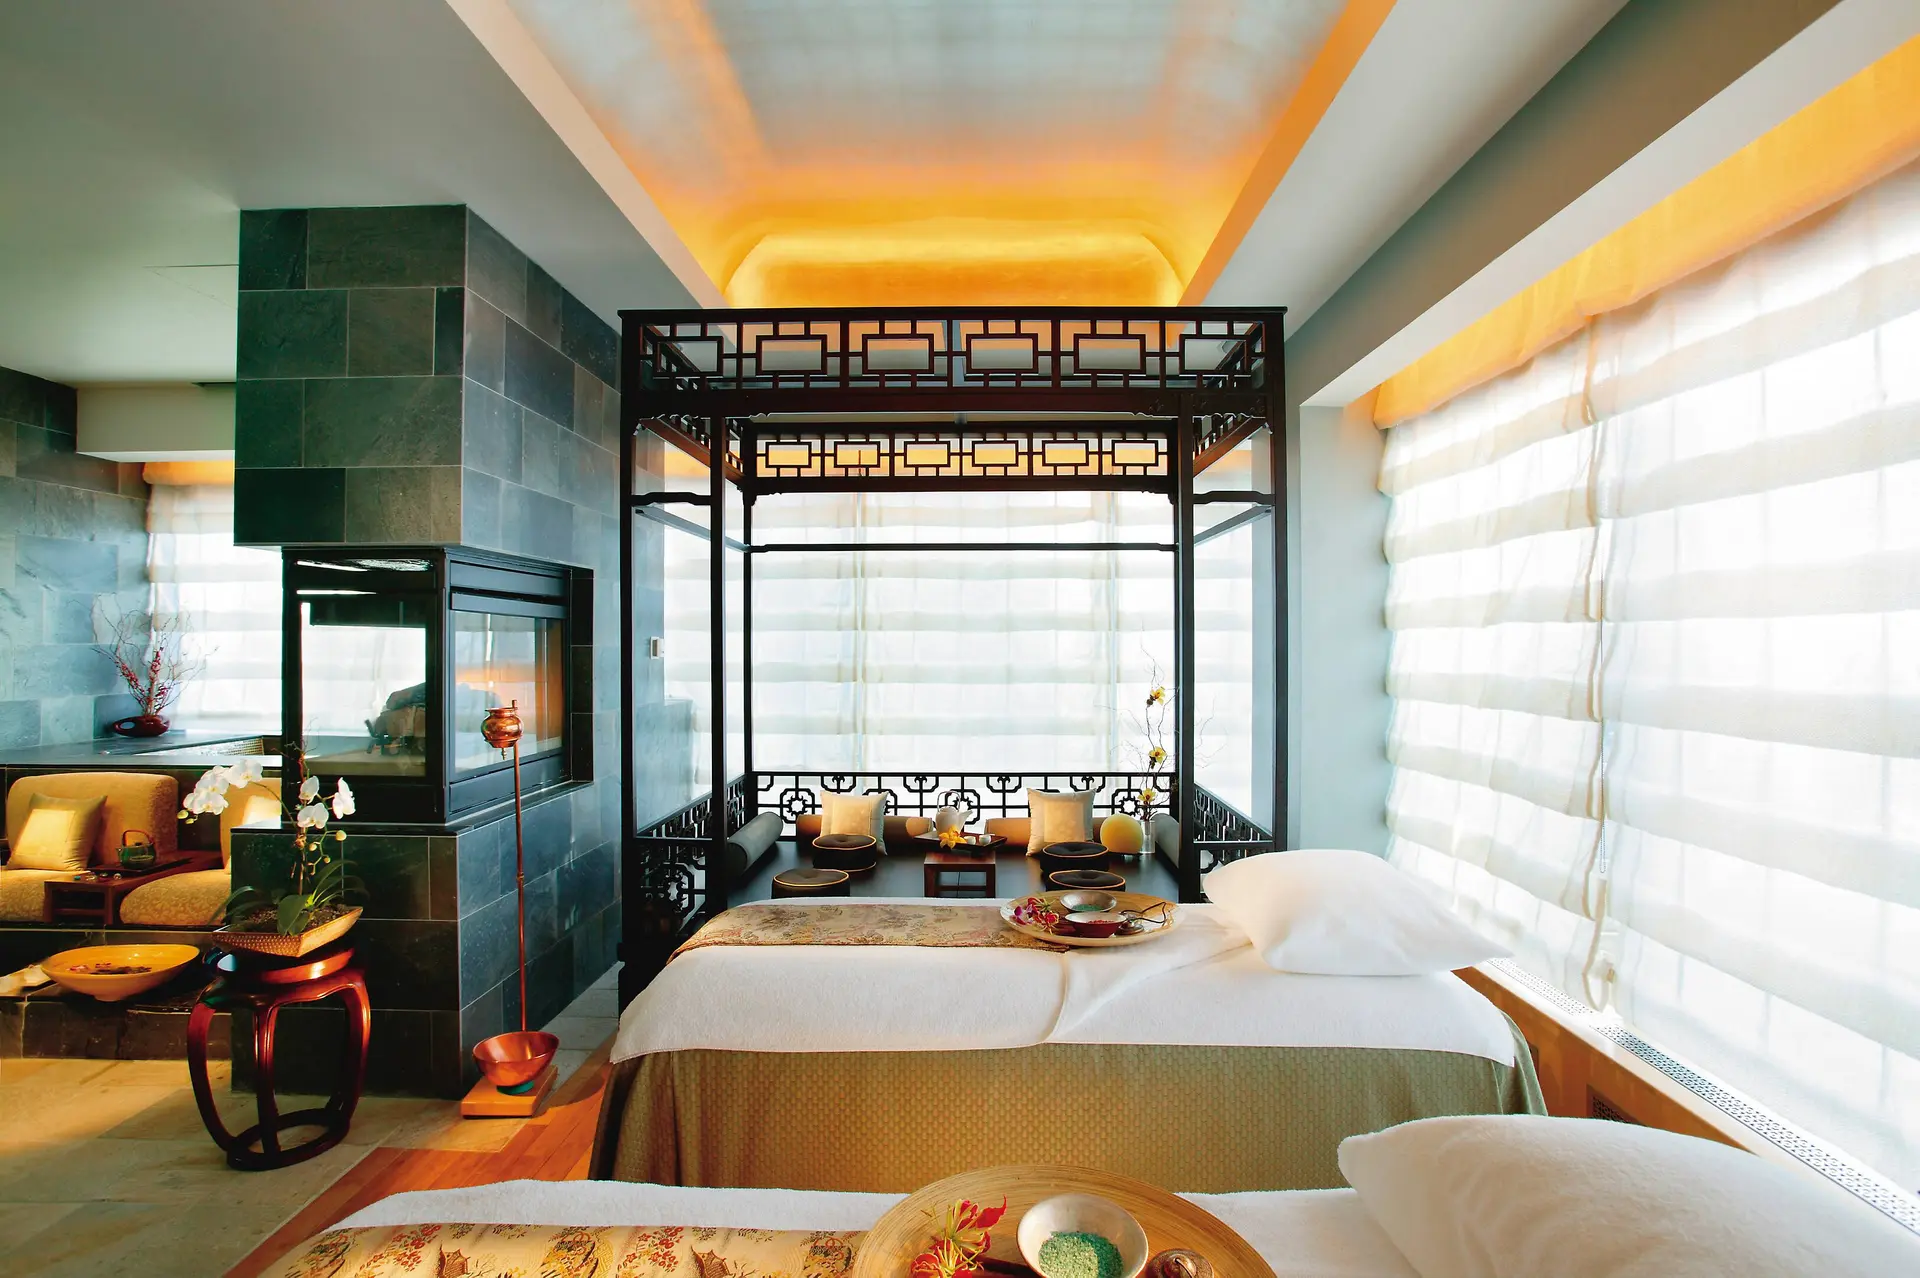 Hotel review Service & Facilities' - Mandarin Oriental New York - 7